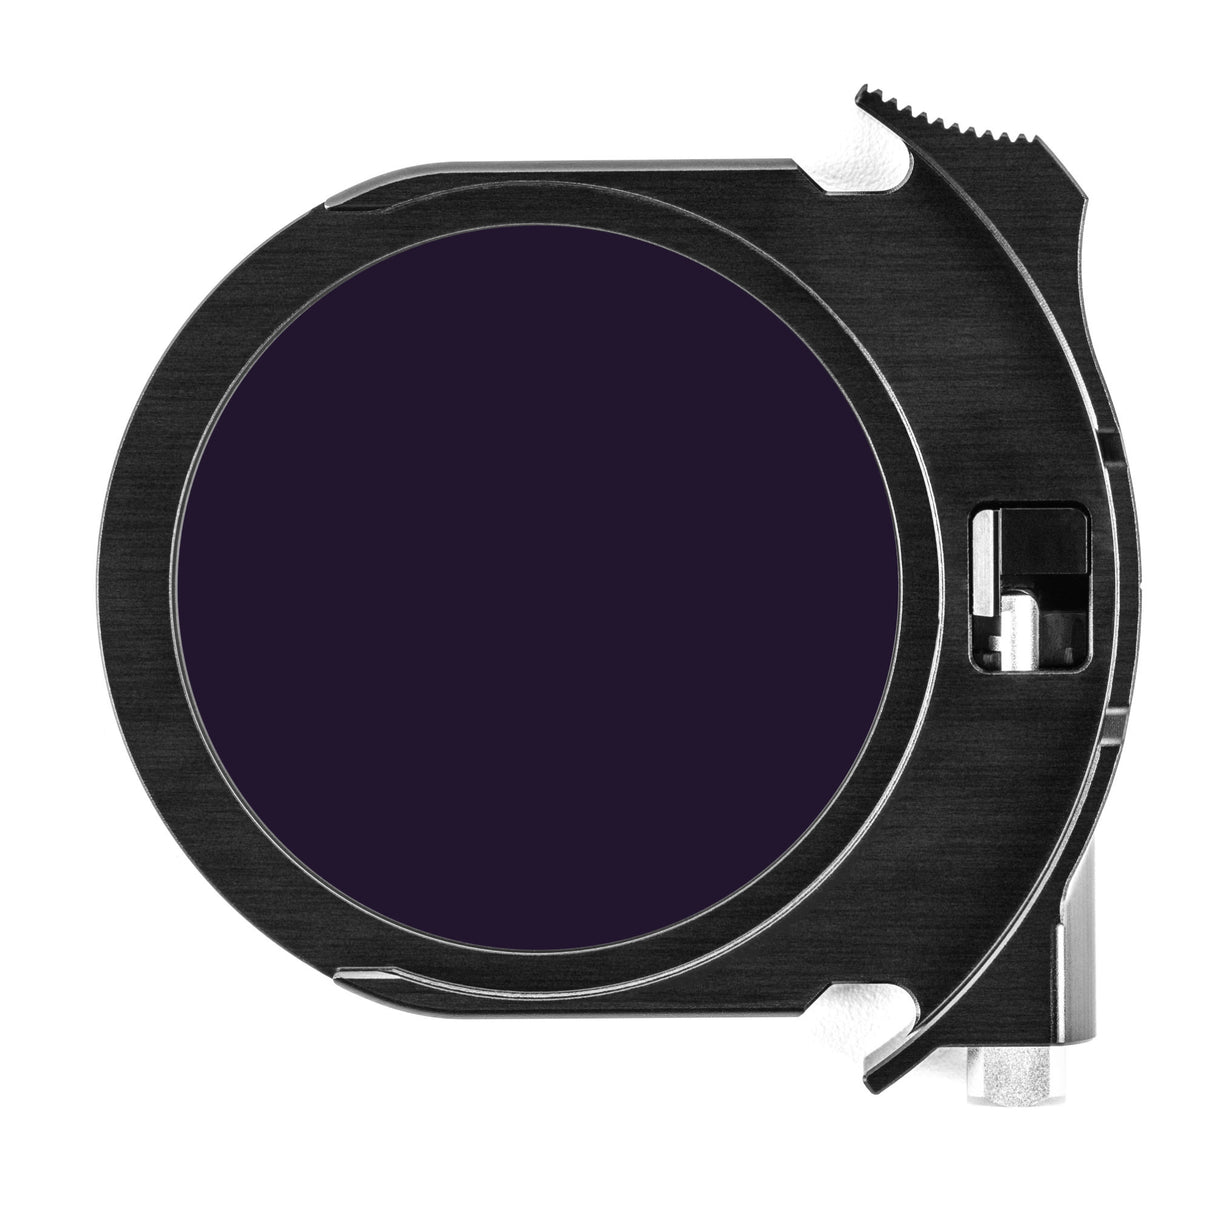 NiSi ATHENA Full Spectrum FS ND Drop-In Filter for ATHENA Lenses